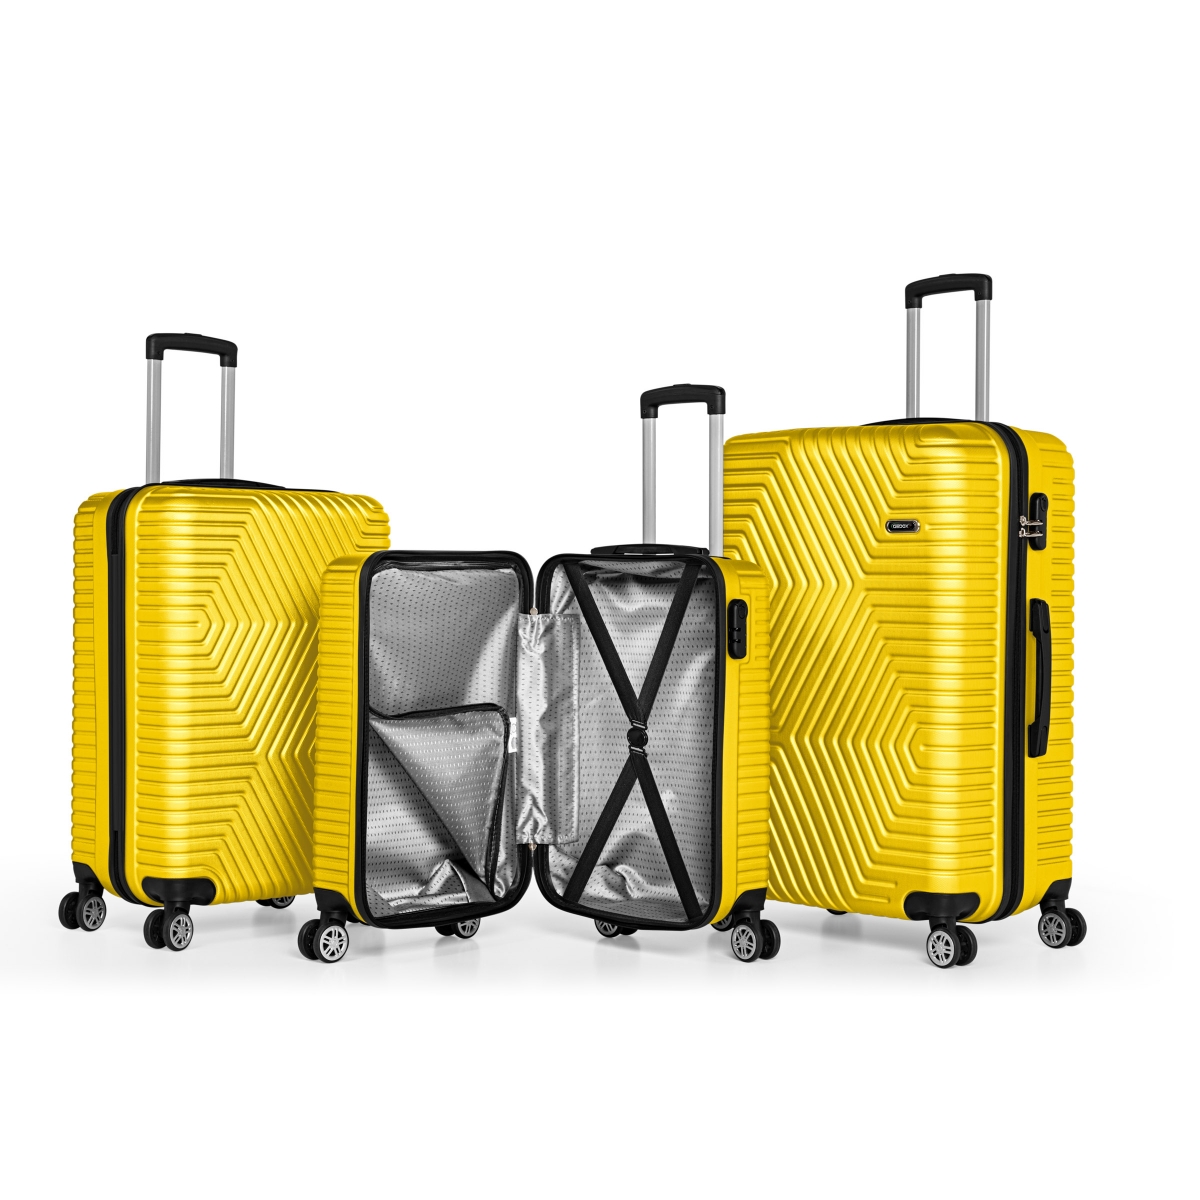 G&D Polo Suitcase ABS 3'lü Lüx Valiz Seyahat Seti - Model:600.12 Sarı